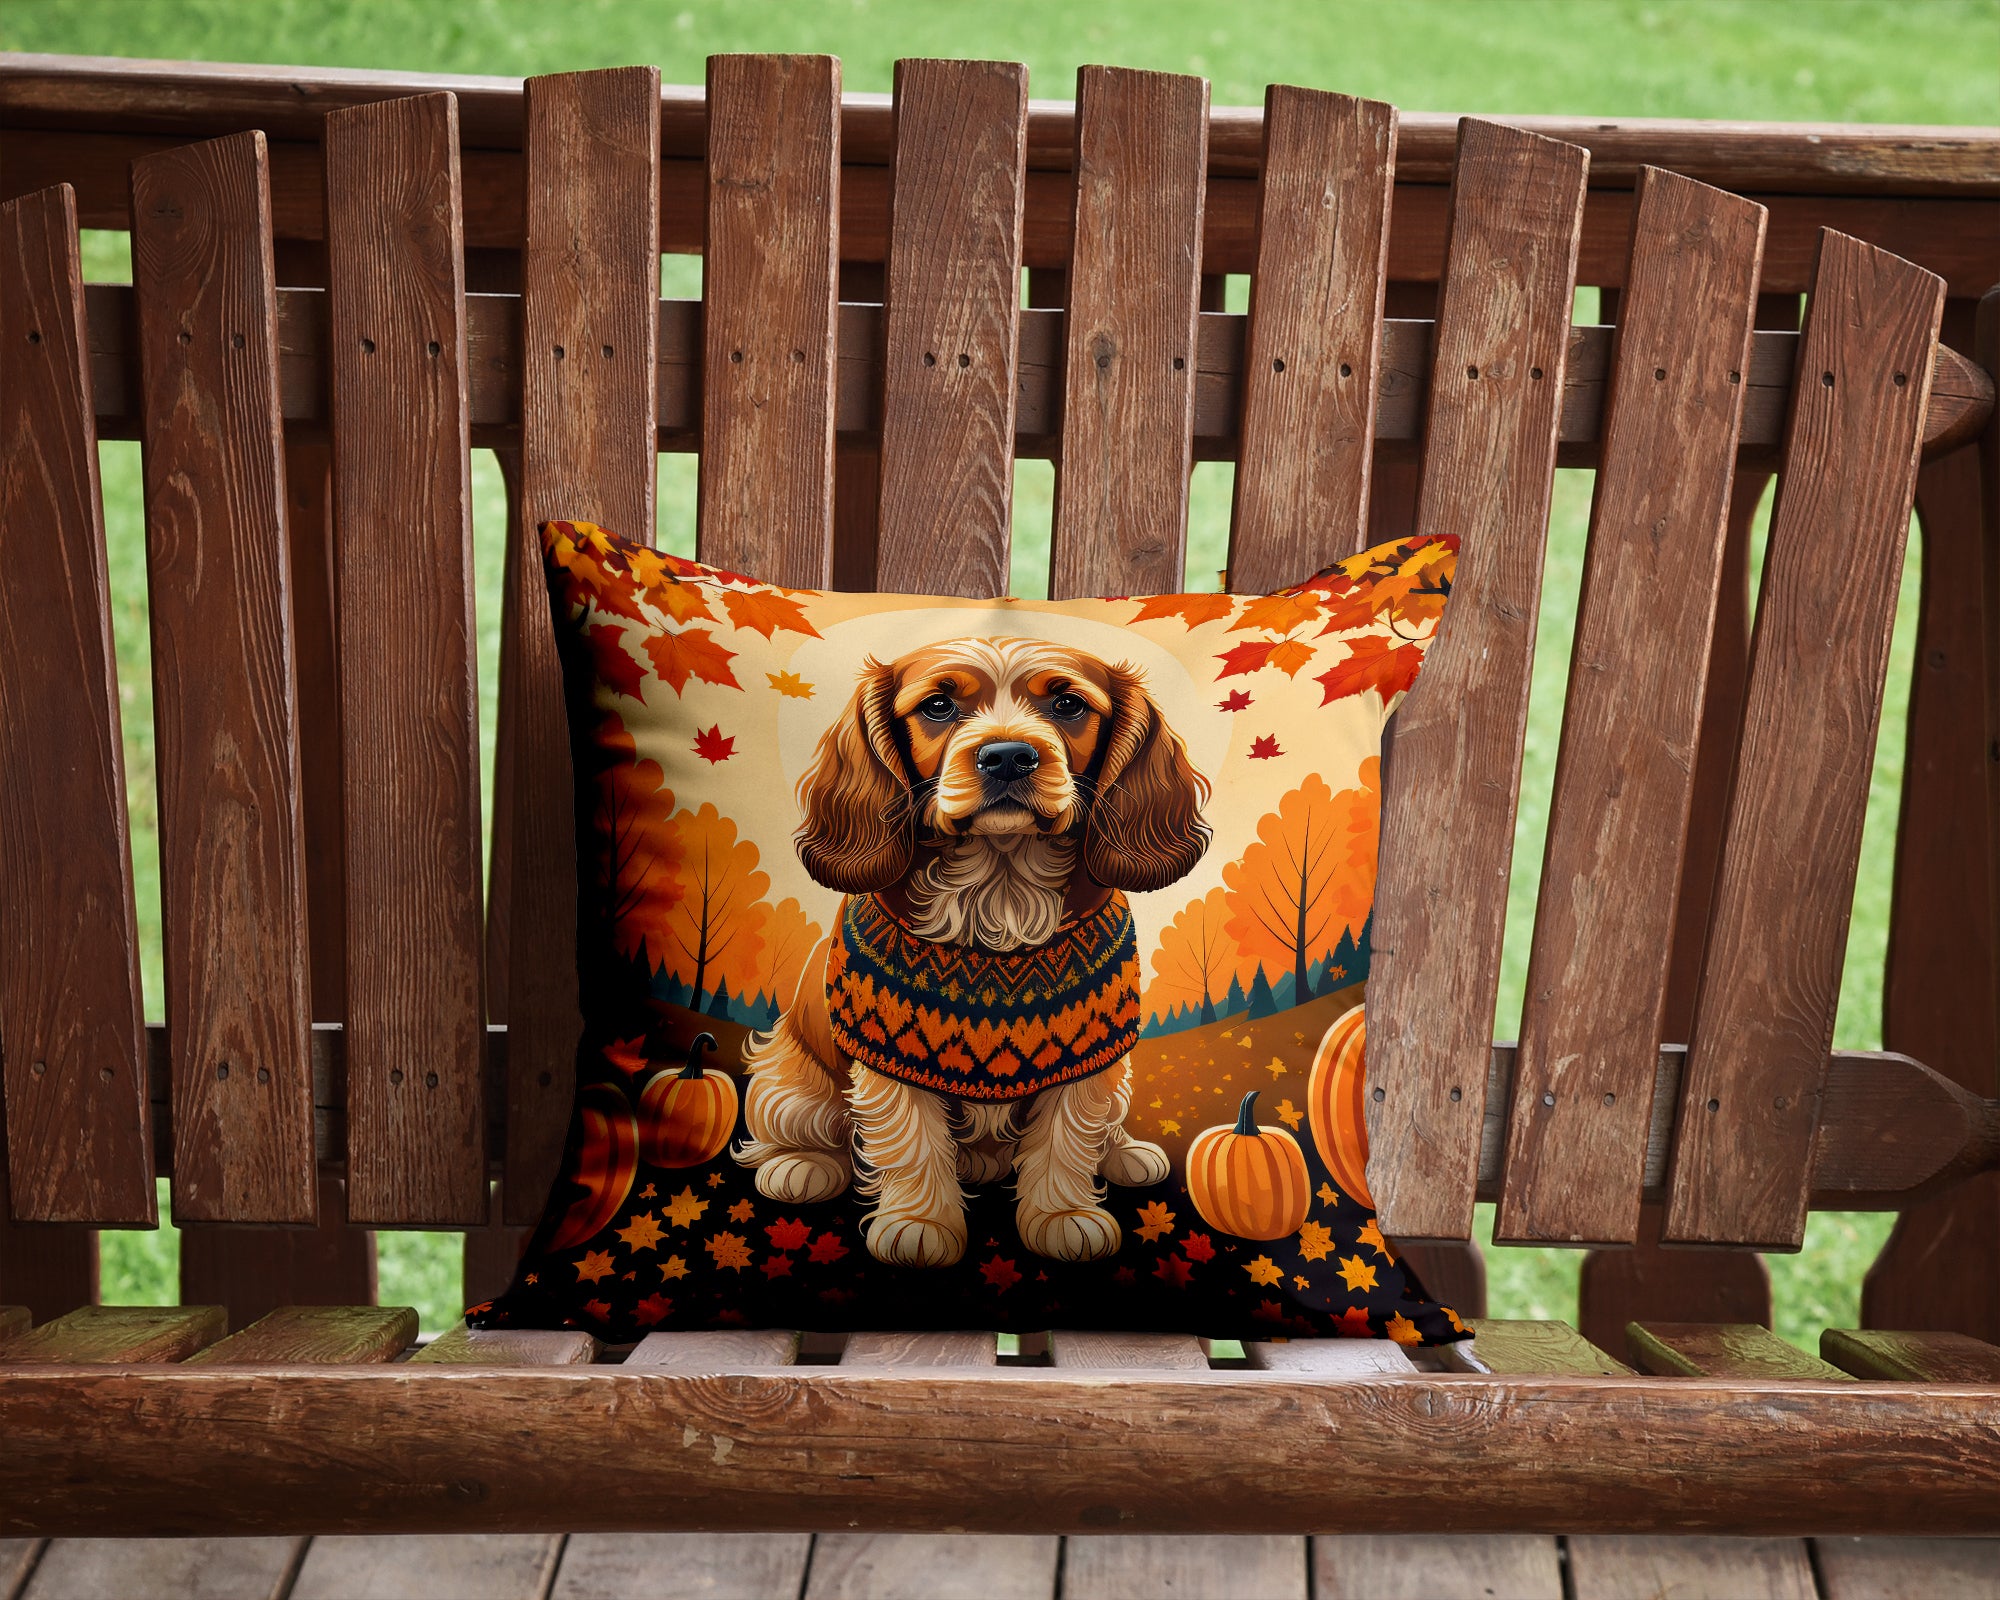 Buy this Cocker Spaniel Fall Fabric Decorative Pillow